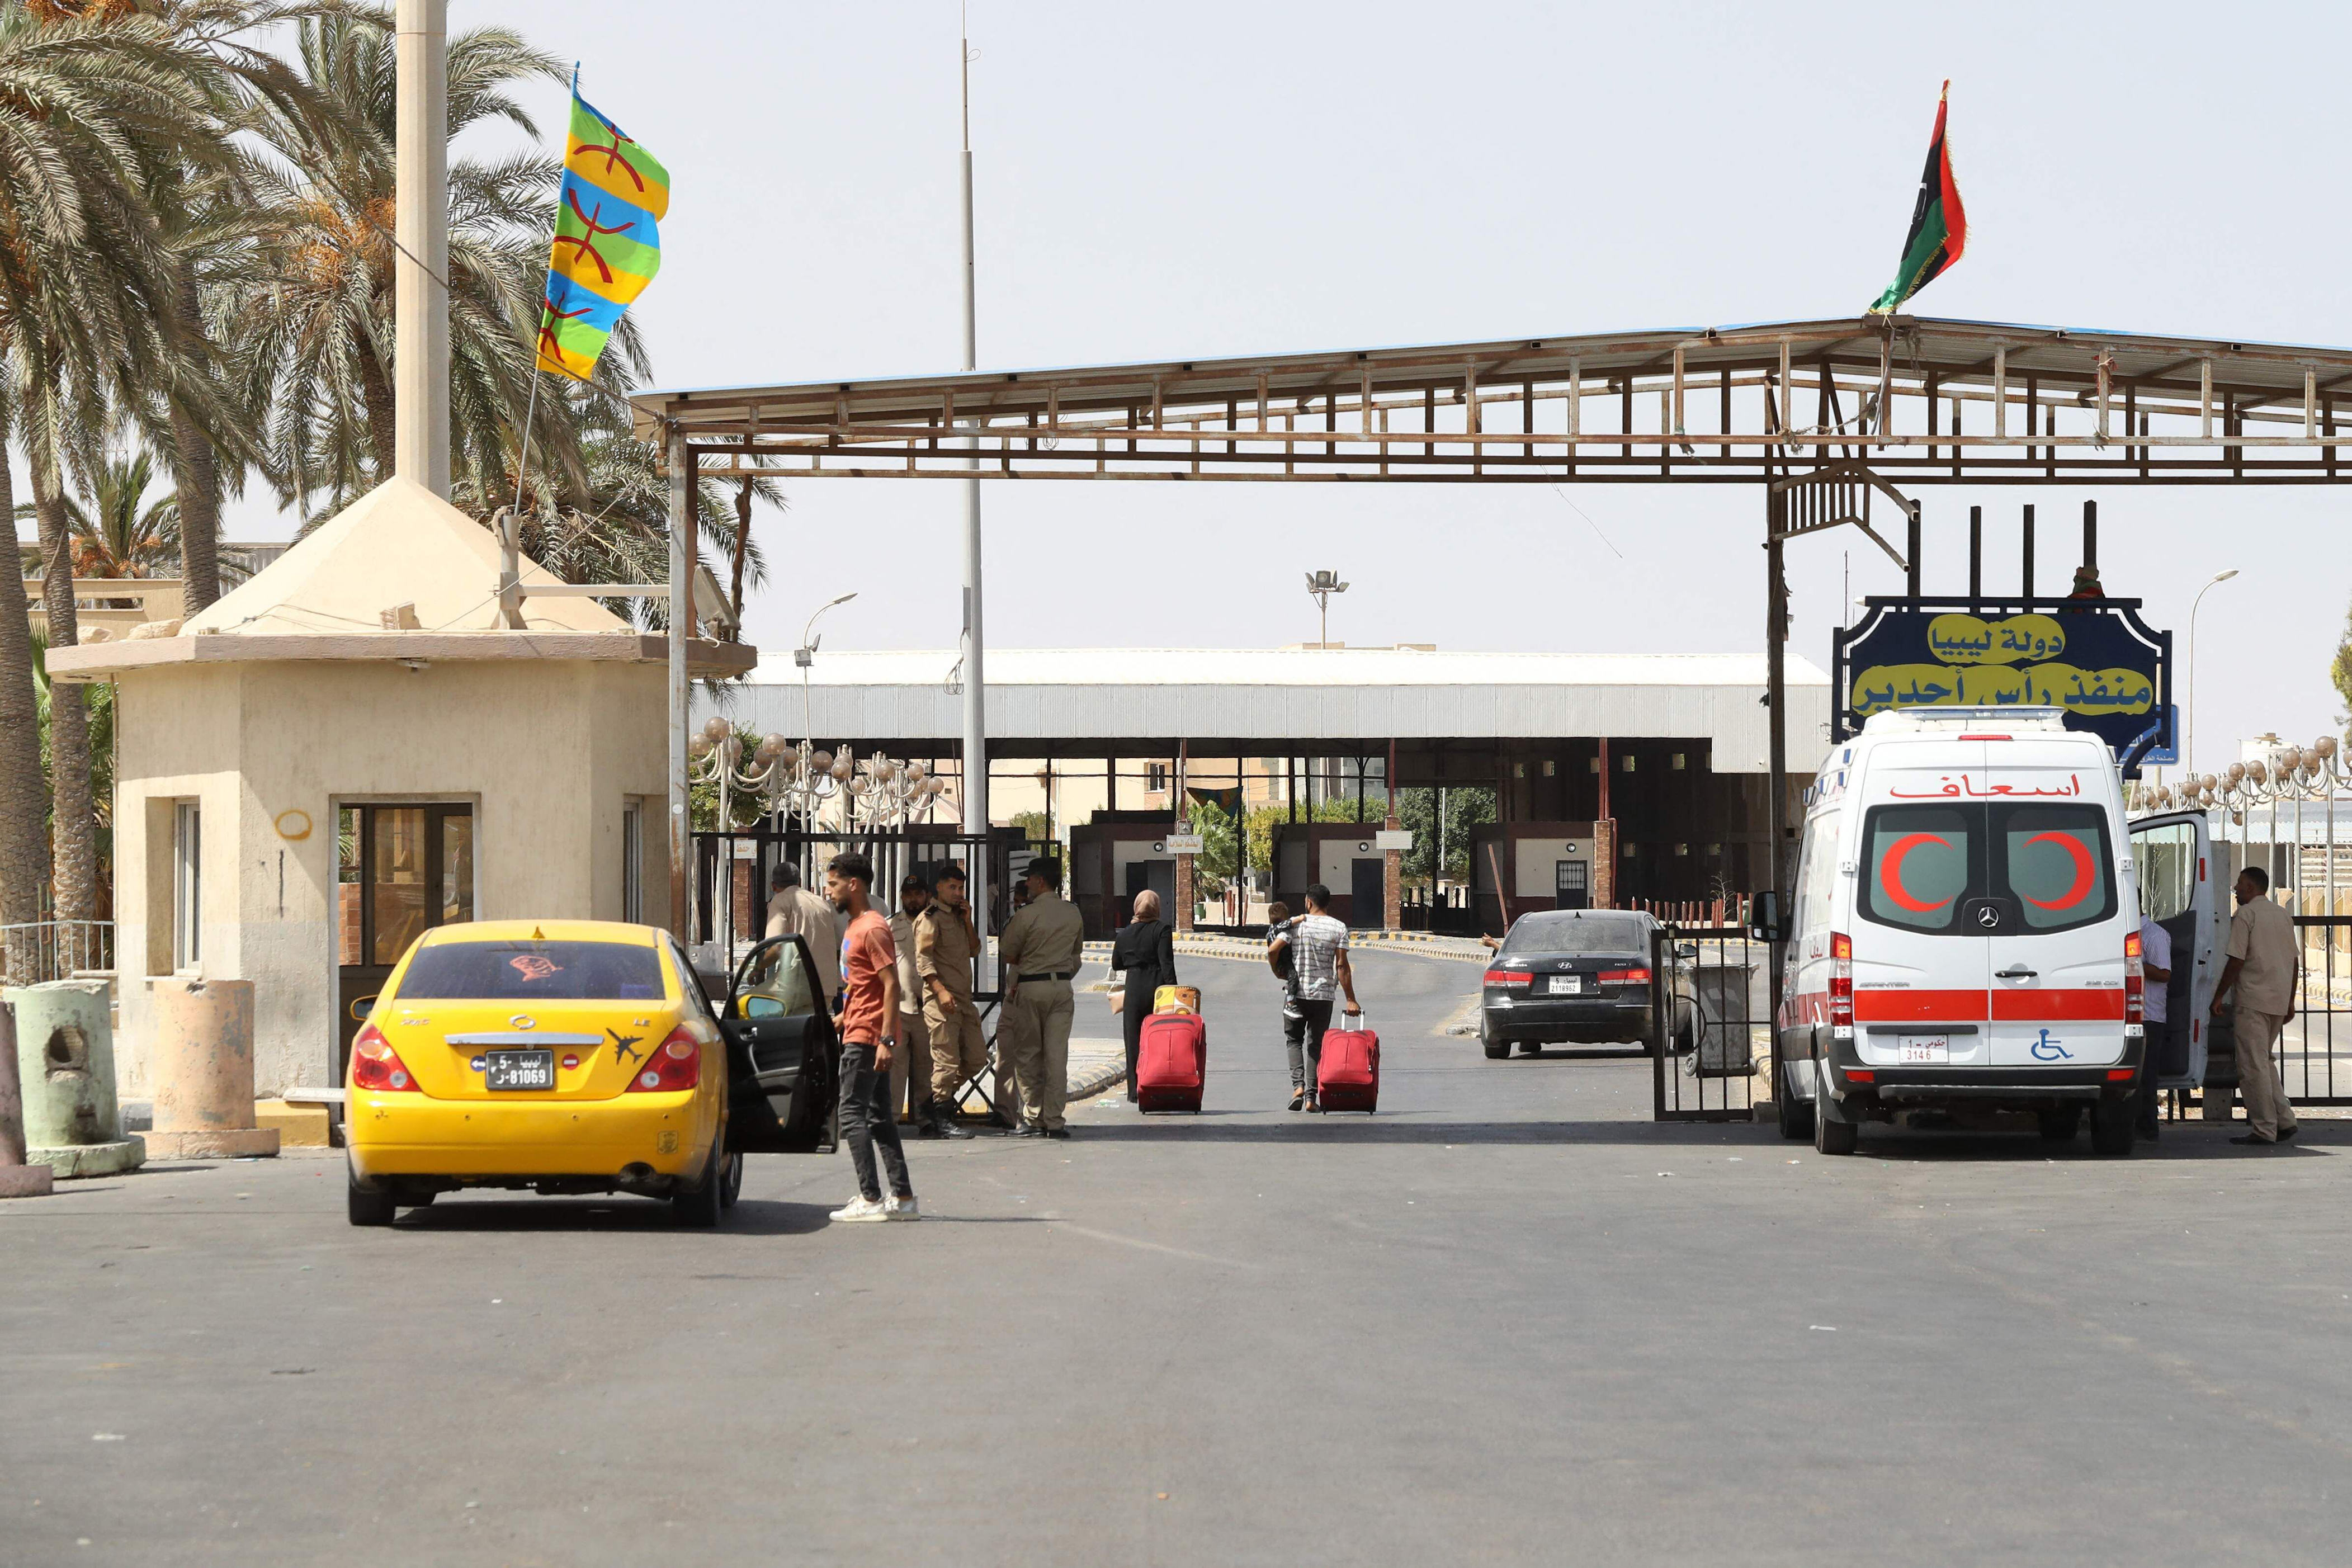 libya-tunisia border crossing closed amid renewed armed clashes